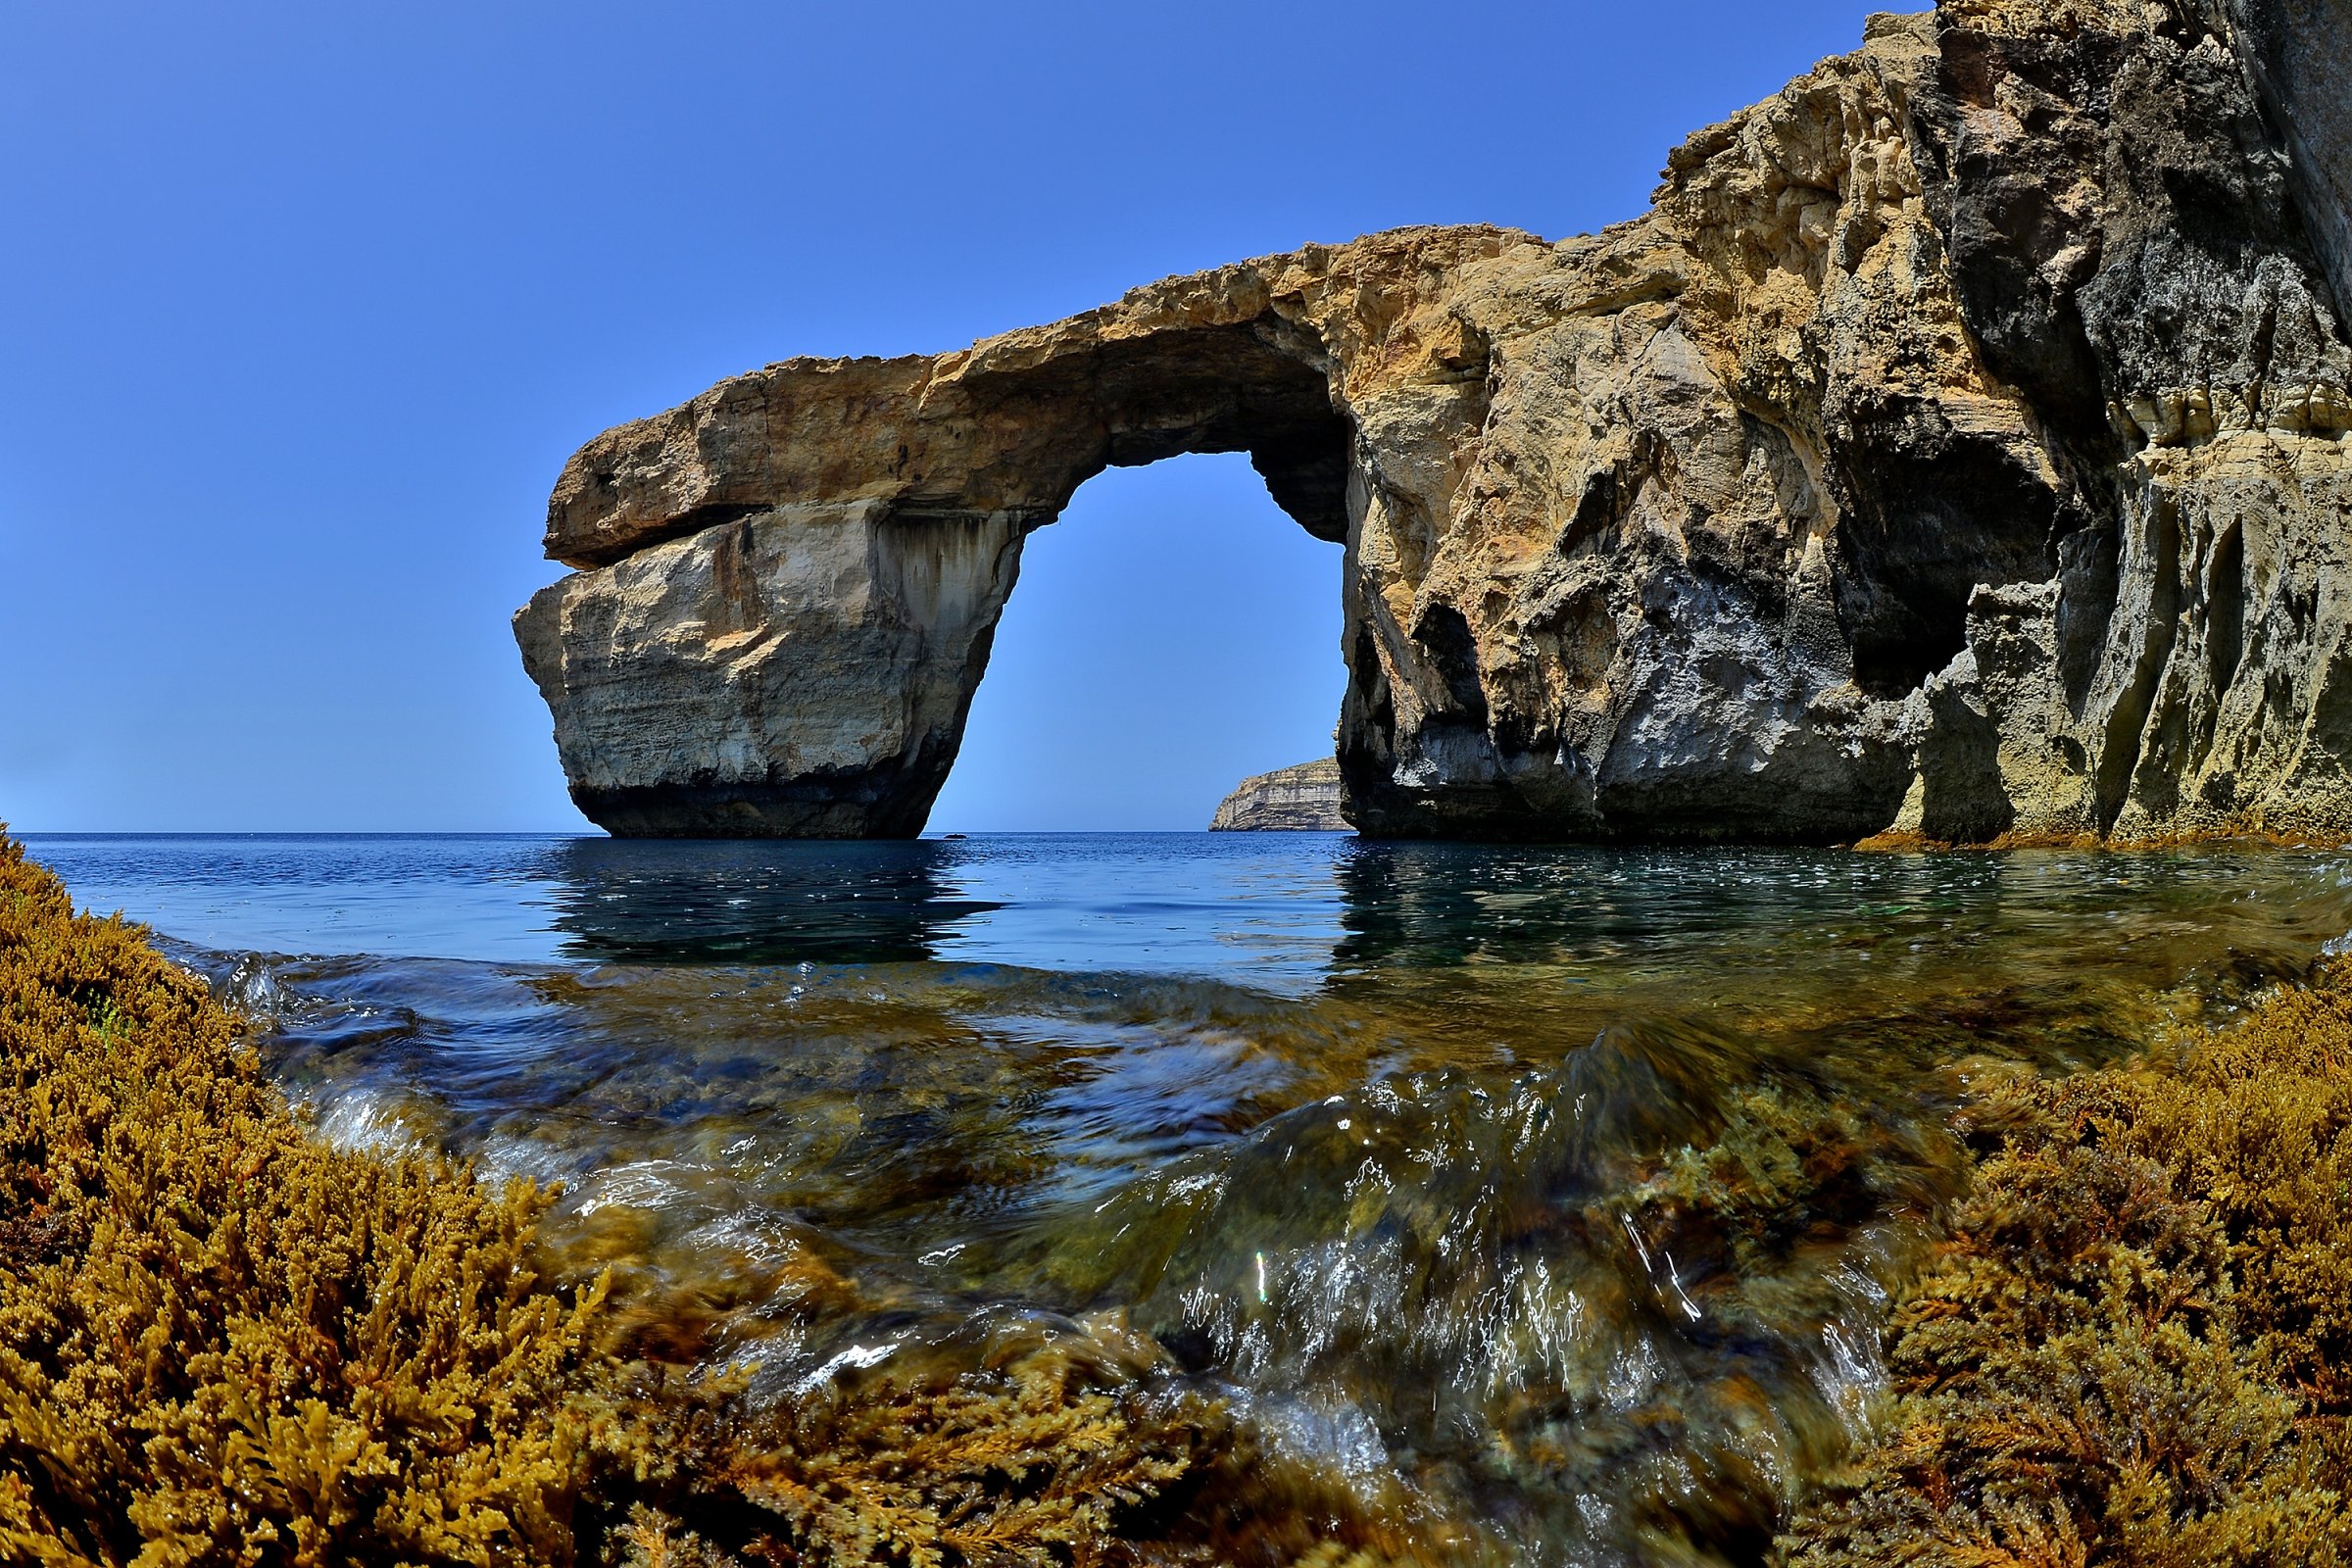 Places To Visit - Malta